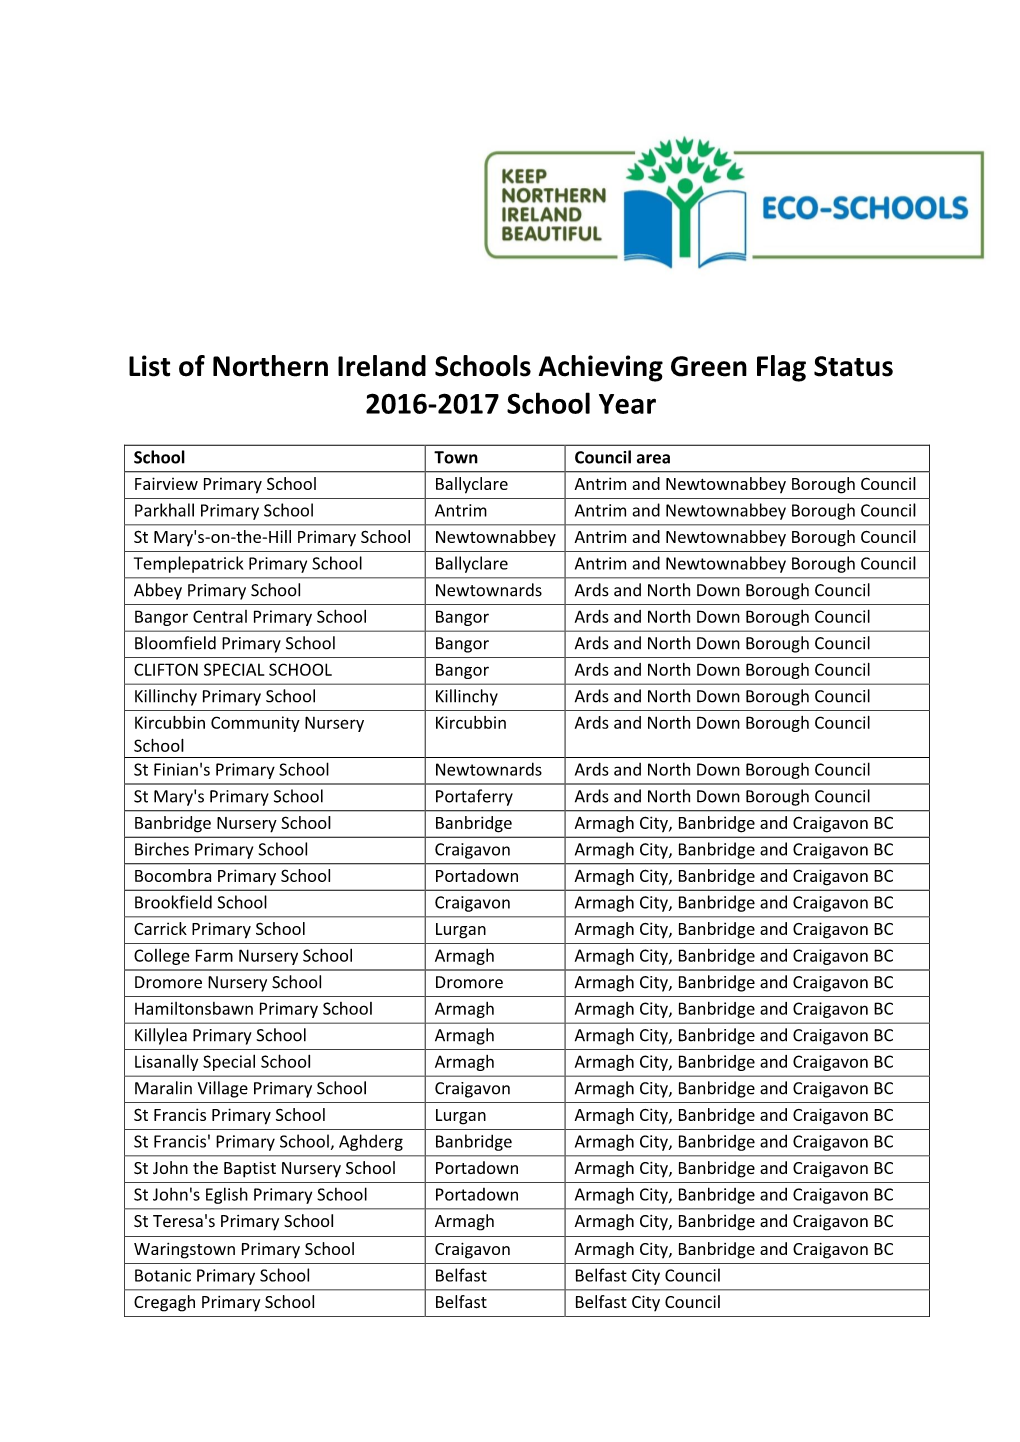 List of Northern Ireland Schools Achieving Green Flag Status 2016-2017 School Year